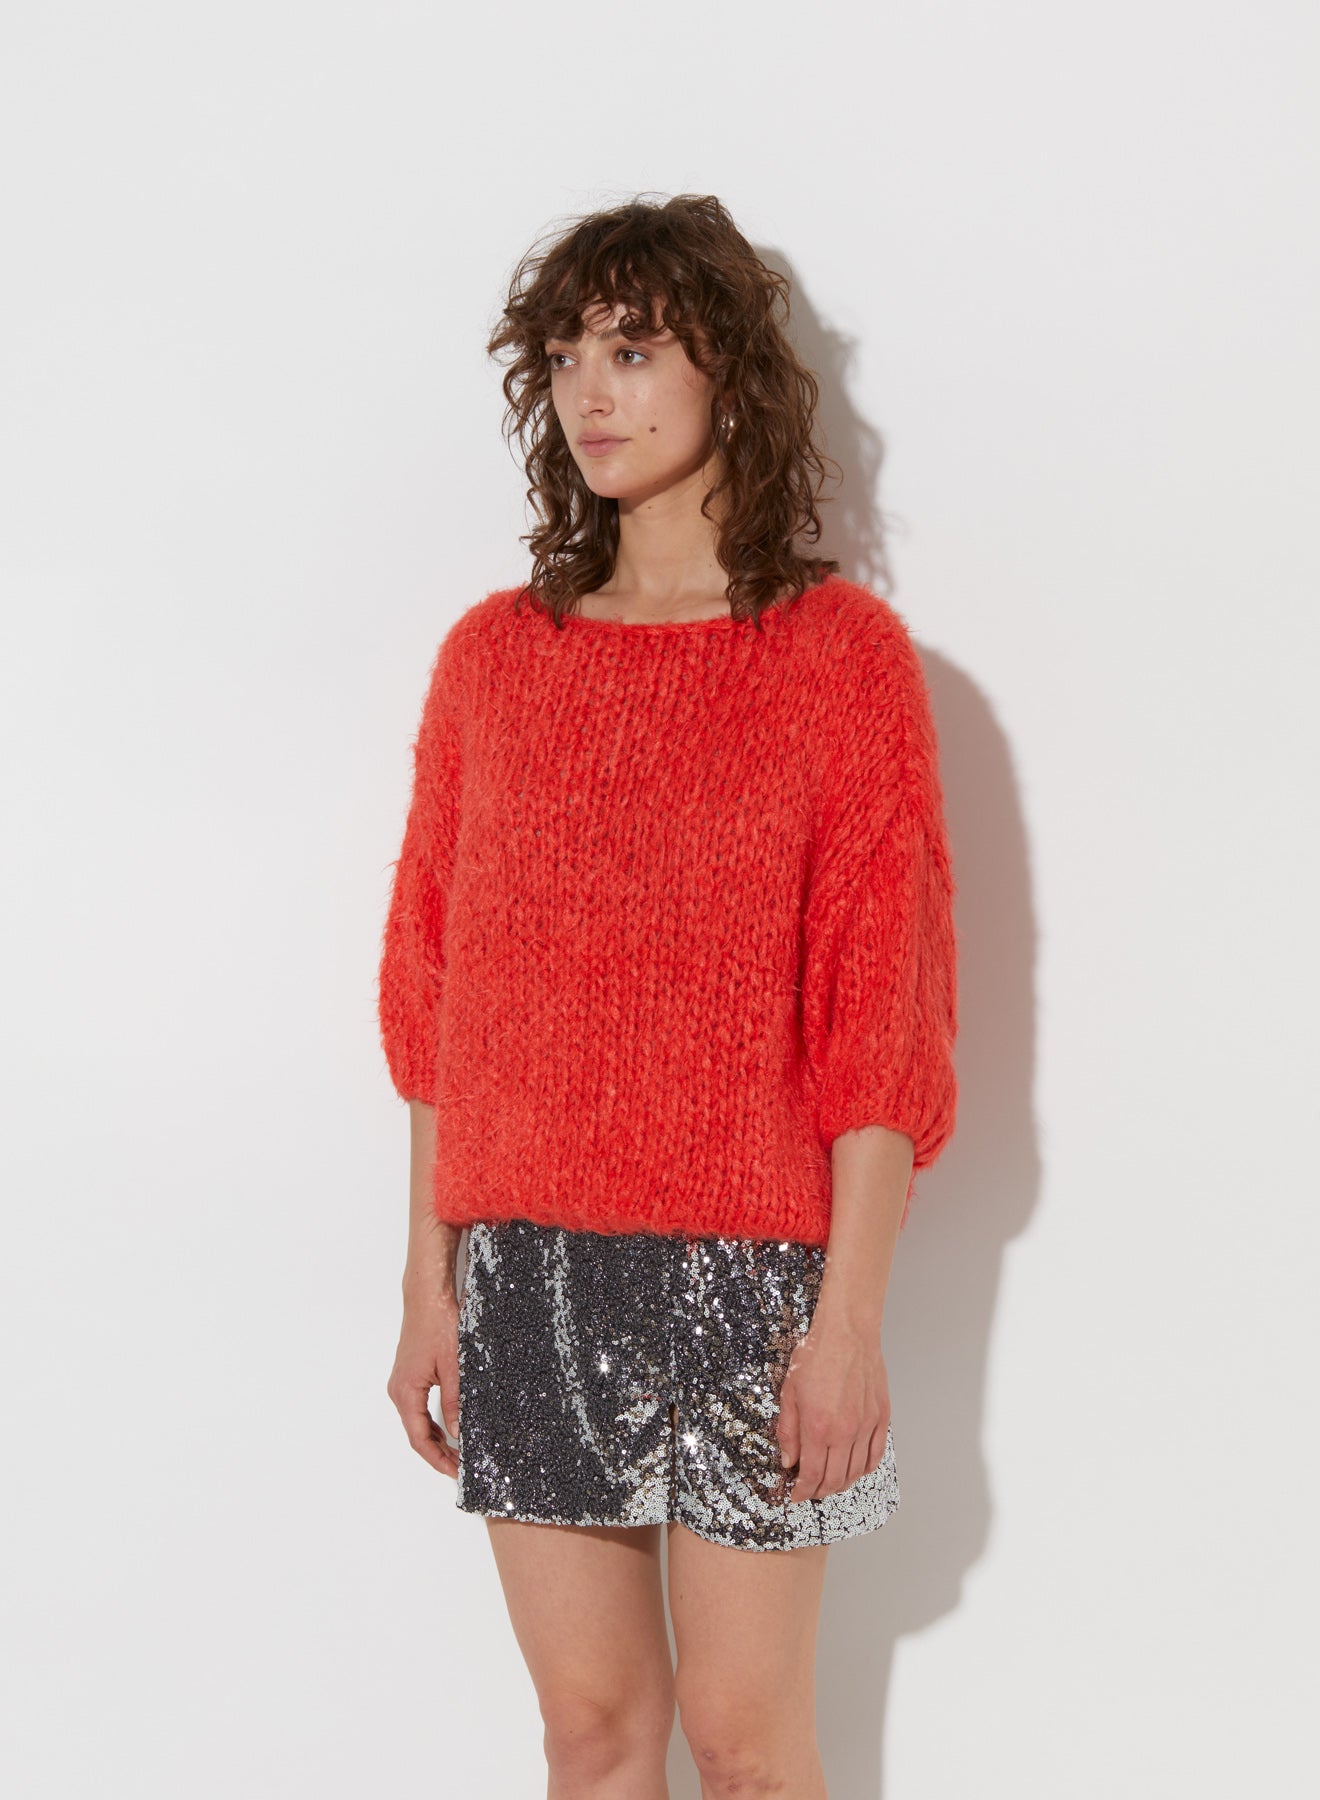 Silk Knit, Neon Red, sweater